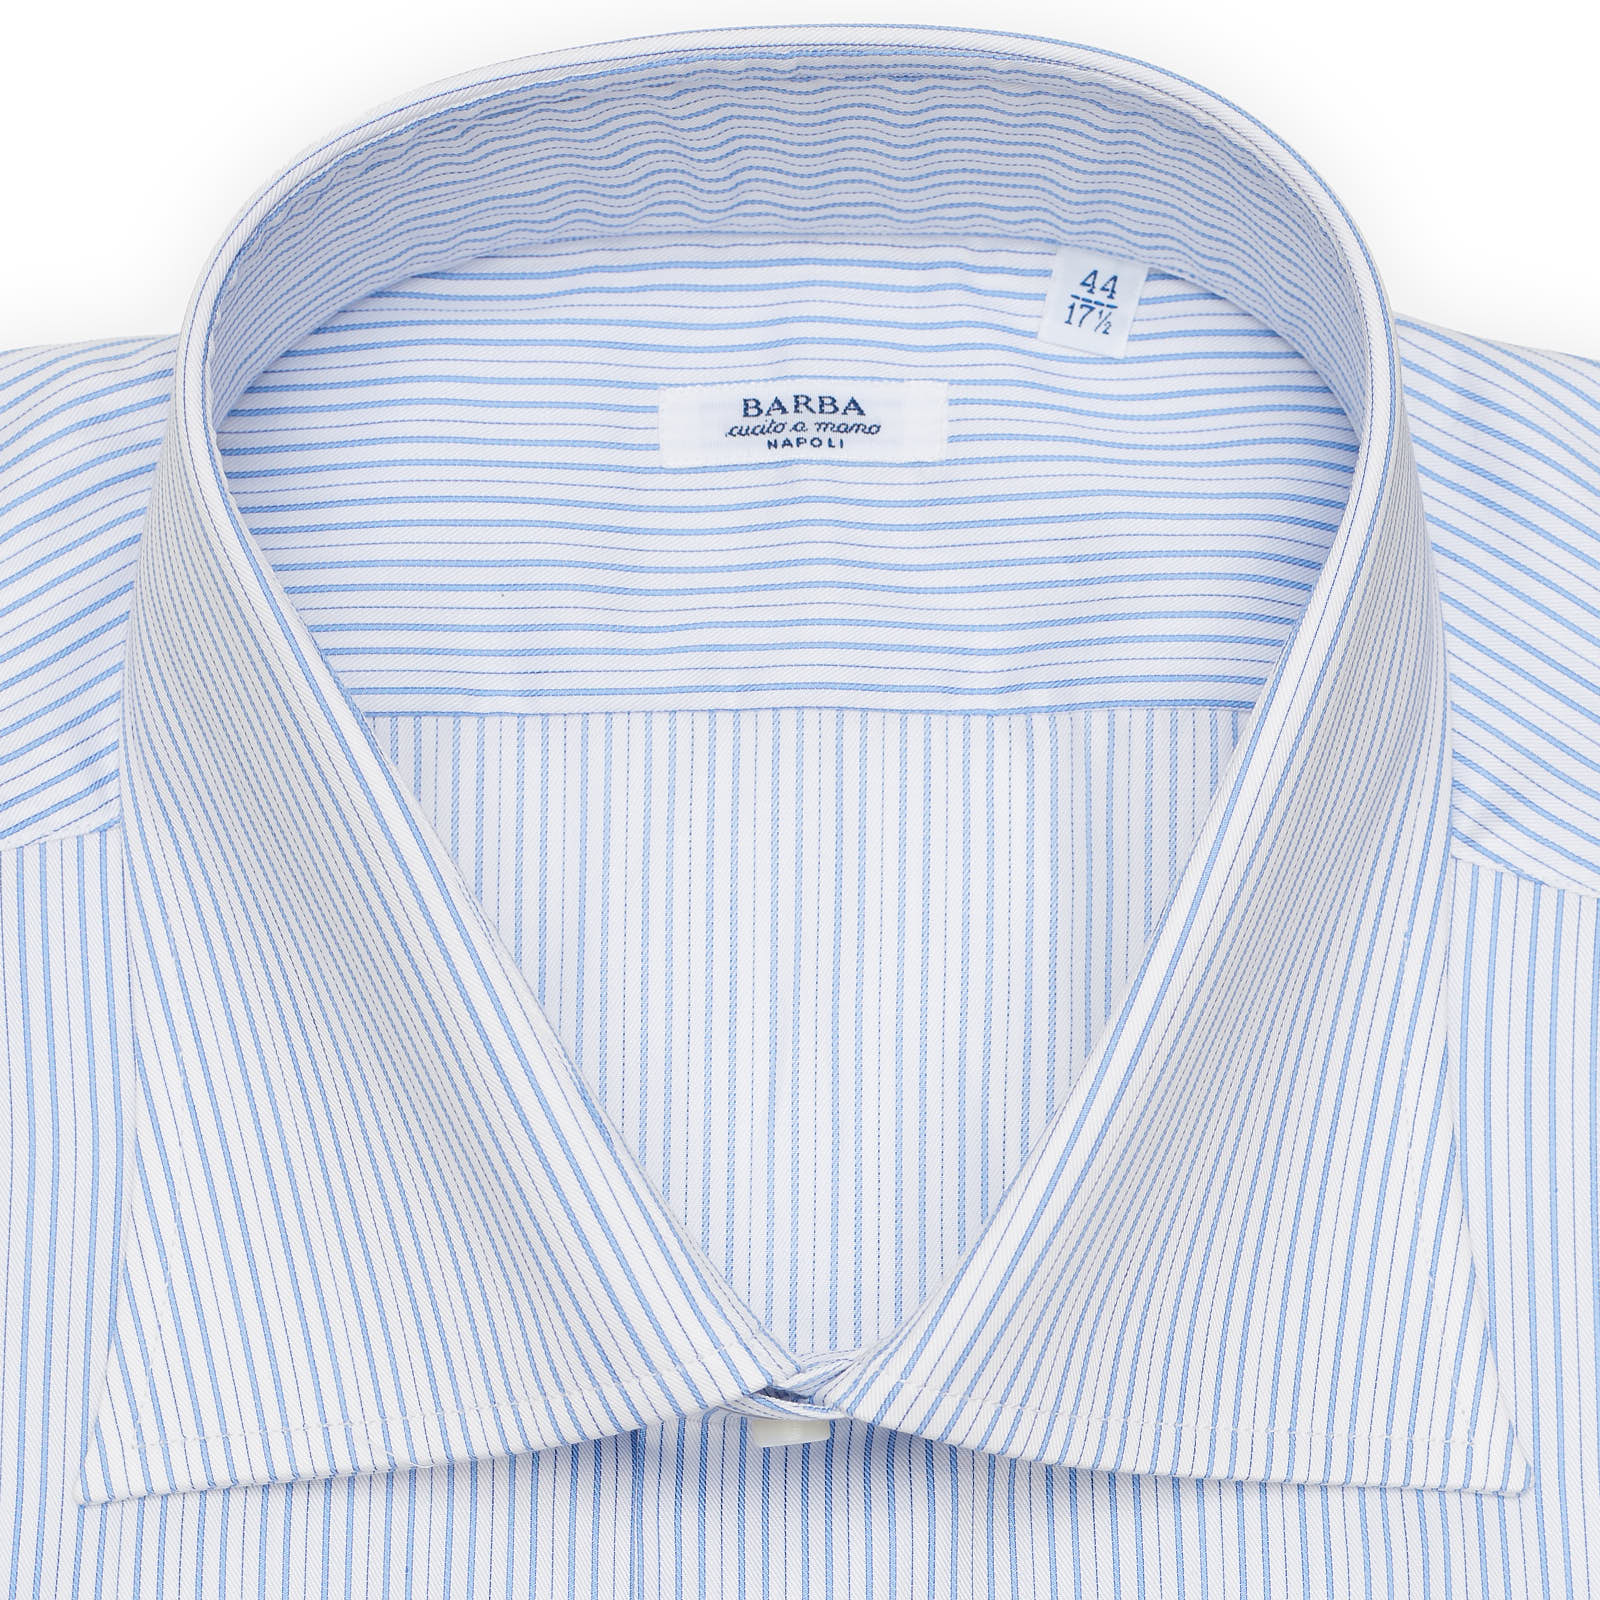 BARBA Napoli Blue-White Striped Twill Cotton French Cuff Dress Shirt EU 44 NEW US 17.5